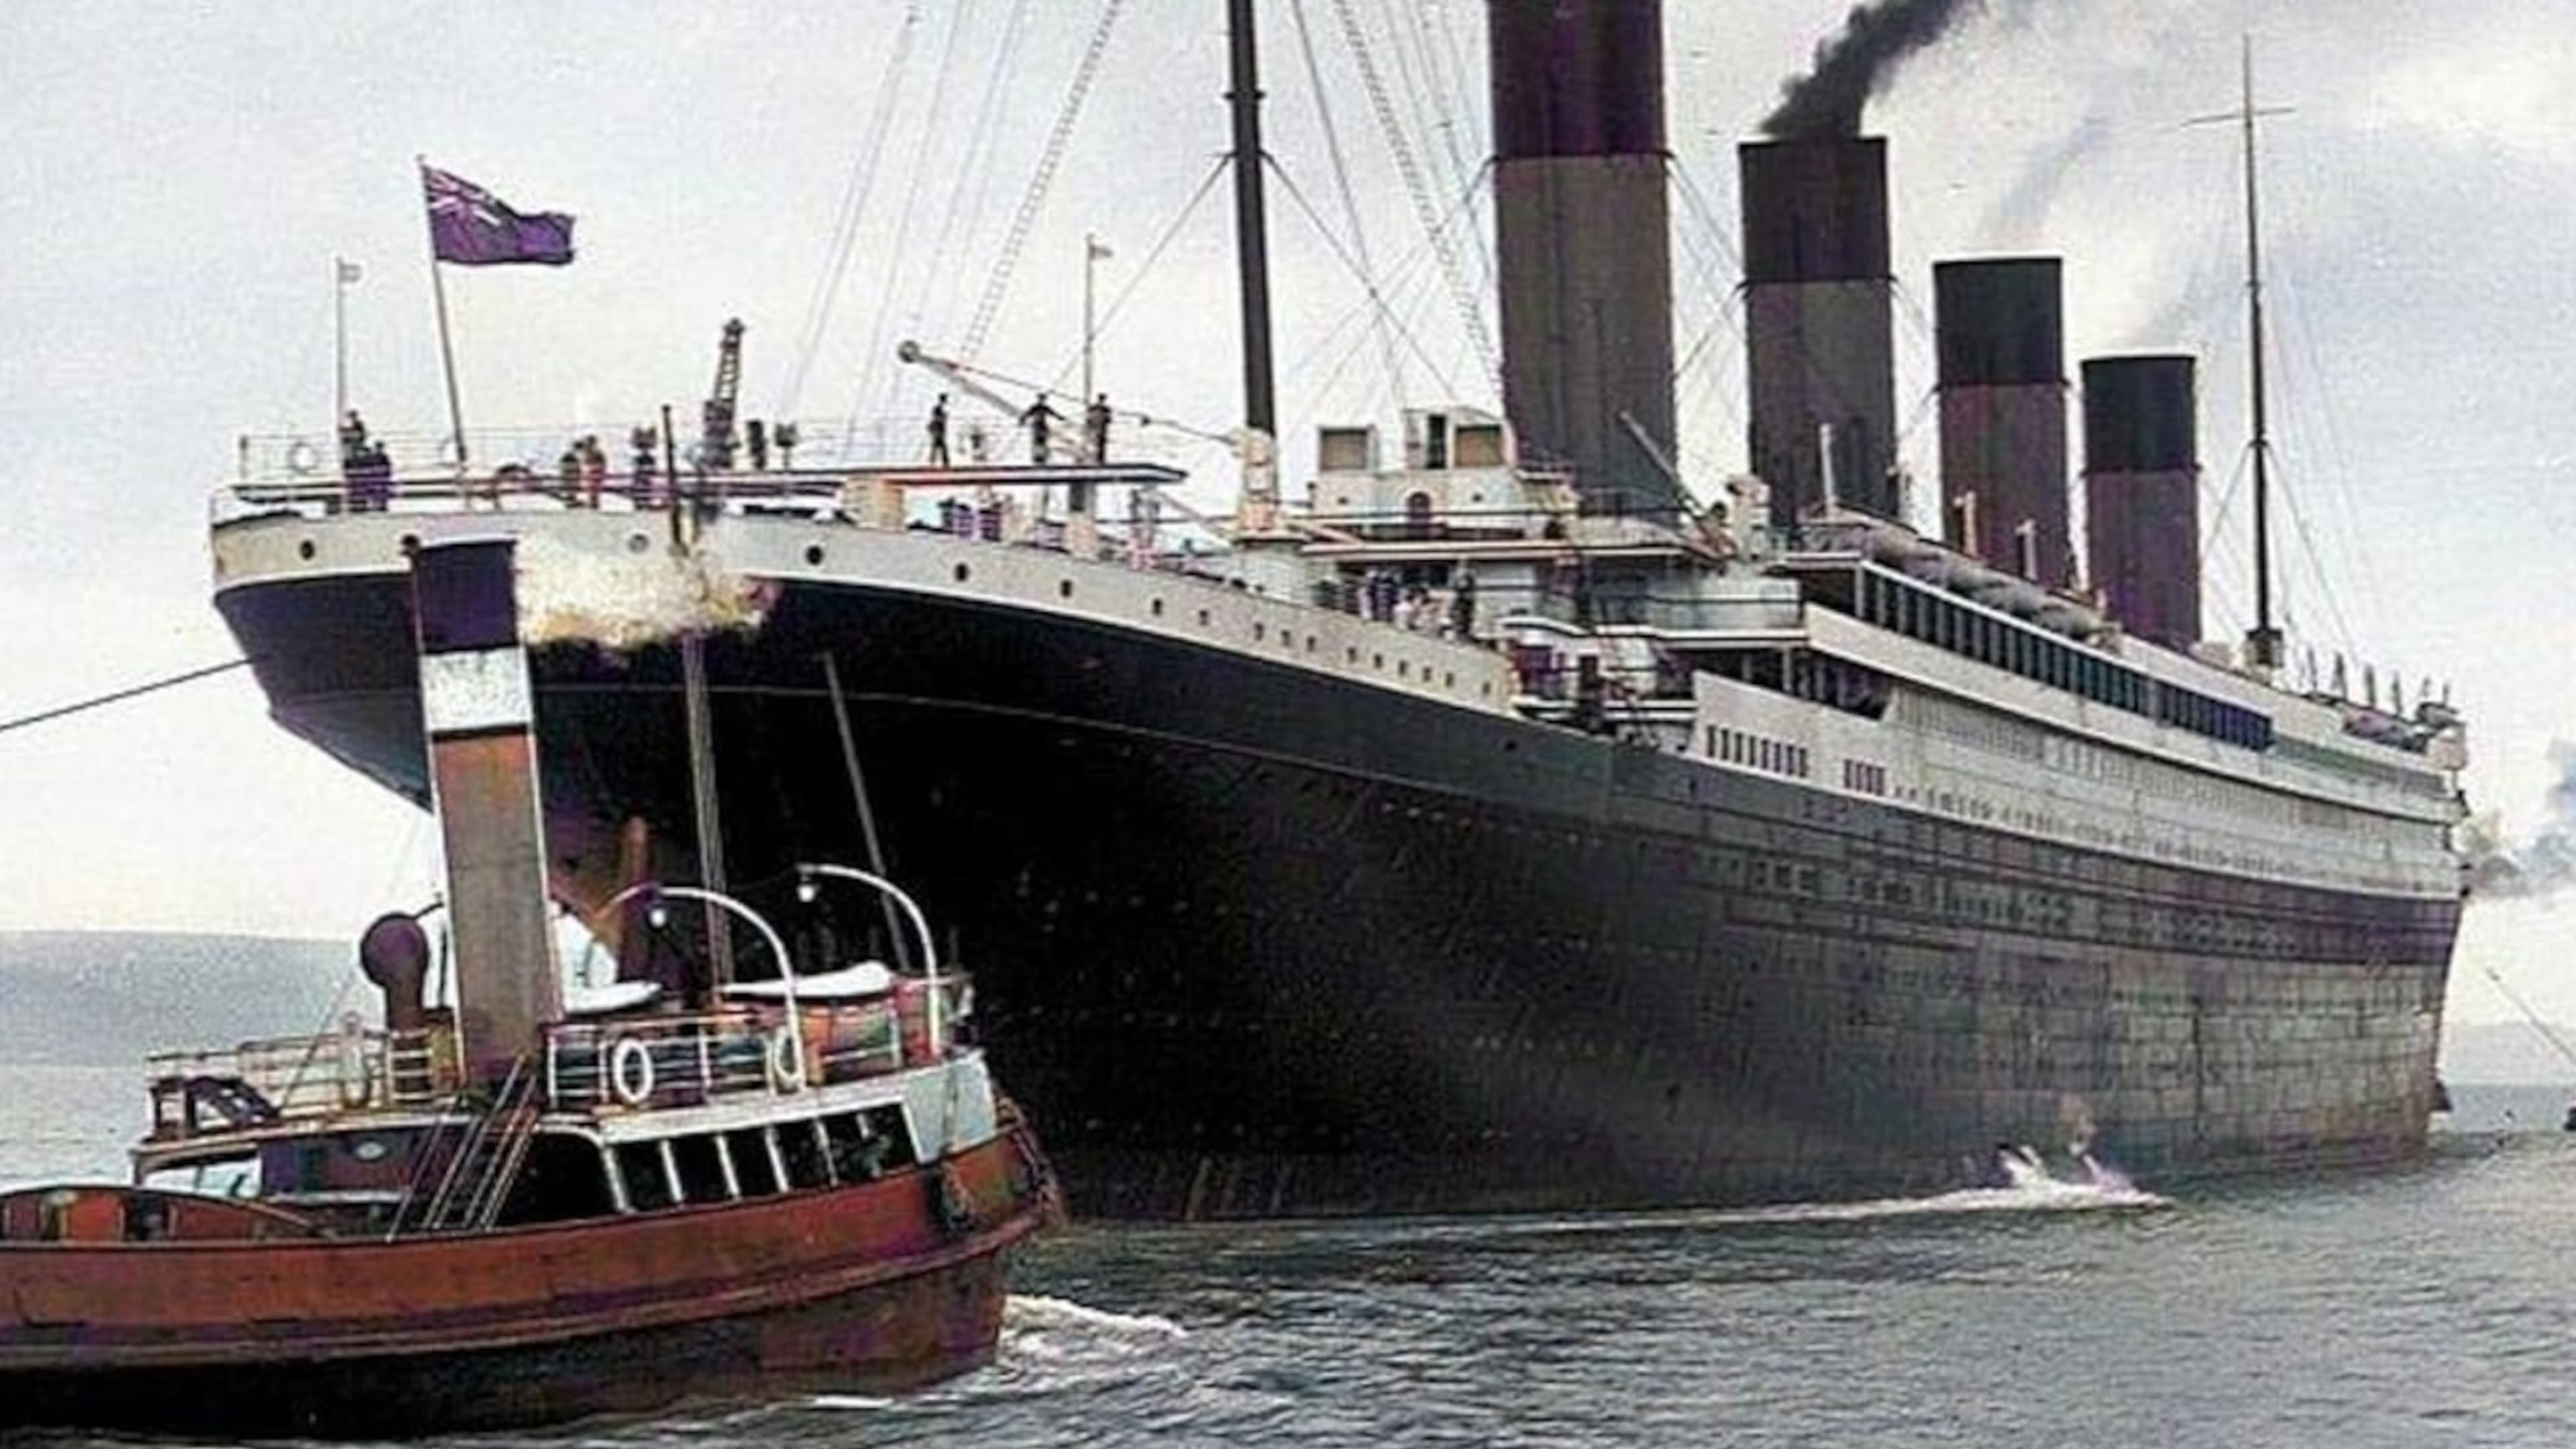 Titanic: The New Evidence (2017)